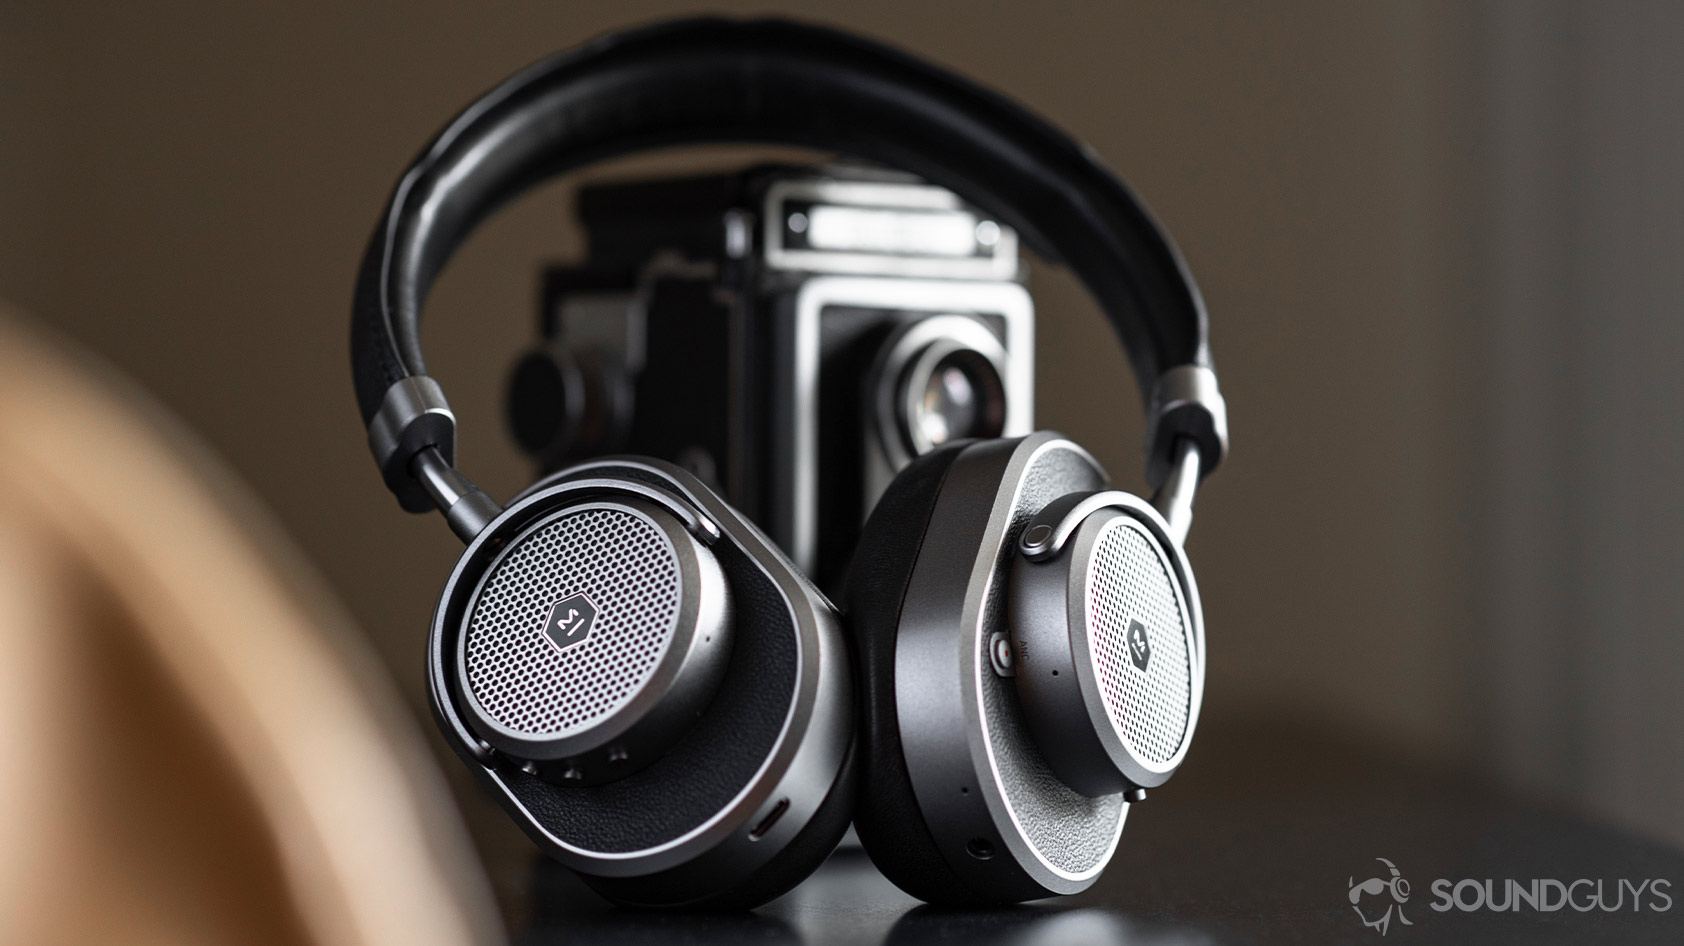 Master &amp; Dynamic MW65 ANC bluetooth audio headphones against a vintage camera.